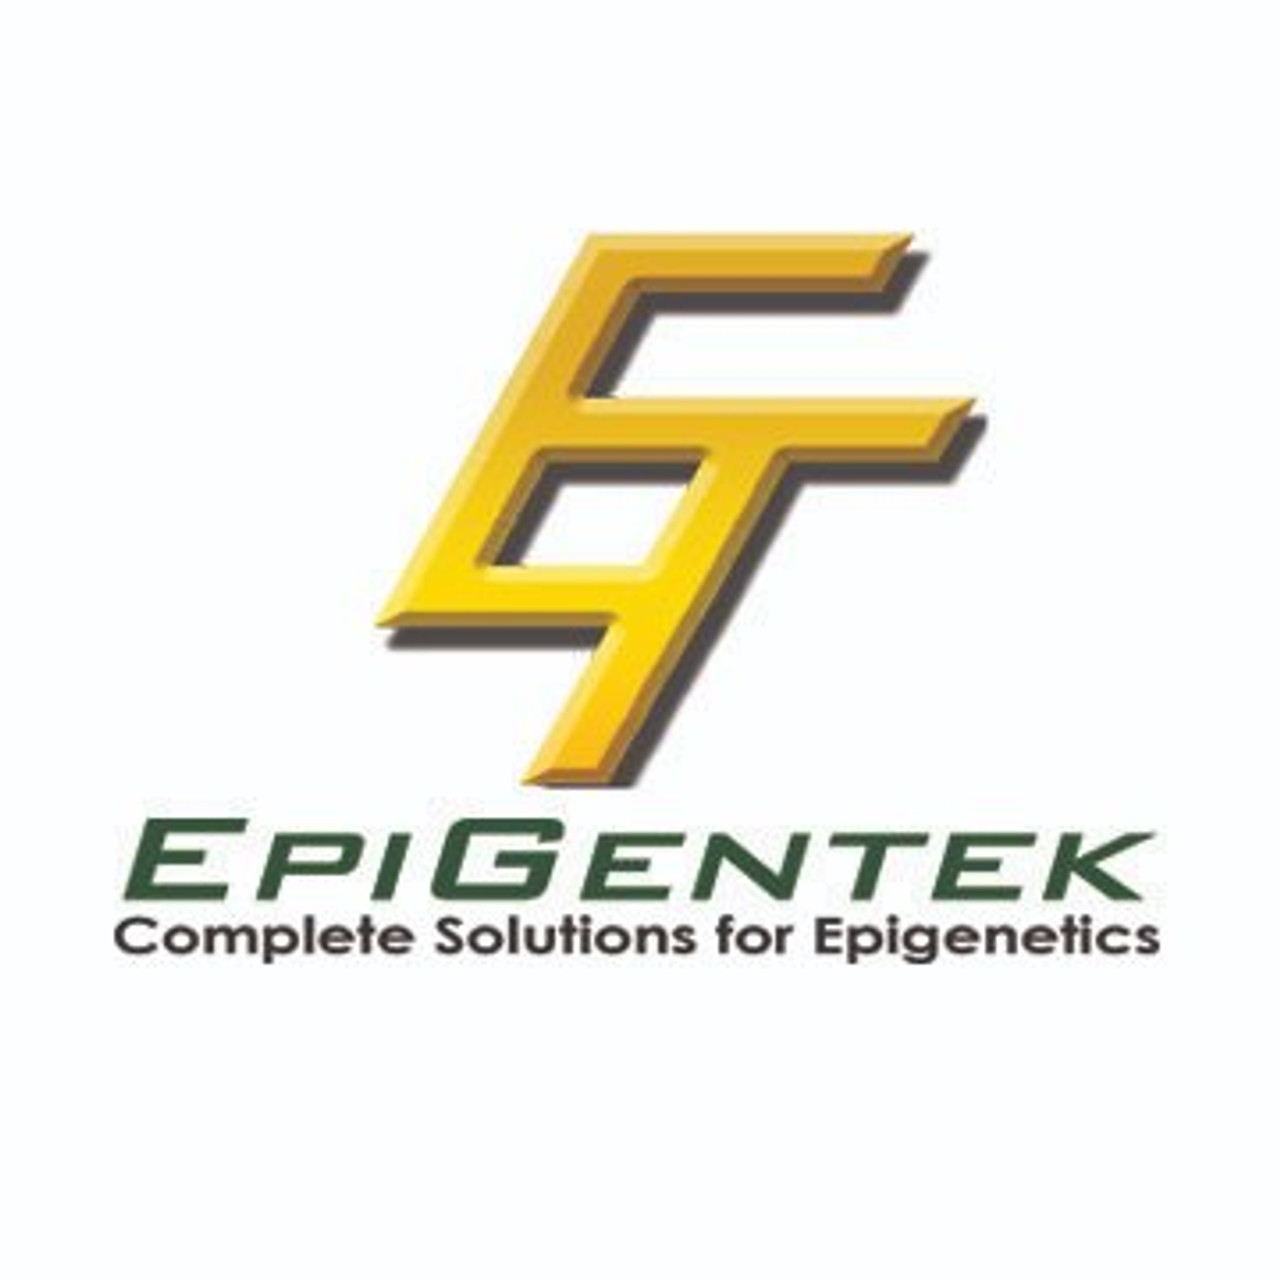 QuantiSir Specific Gene Knockdown Quantification Kit For Epigenetic Regulators - MBD2